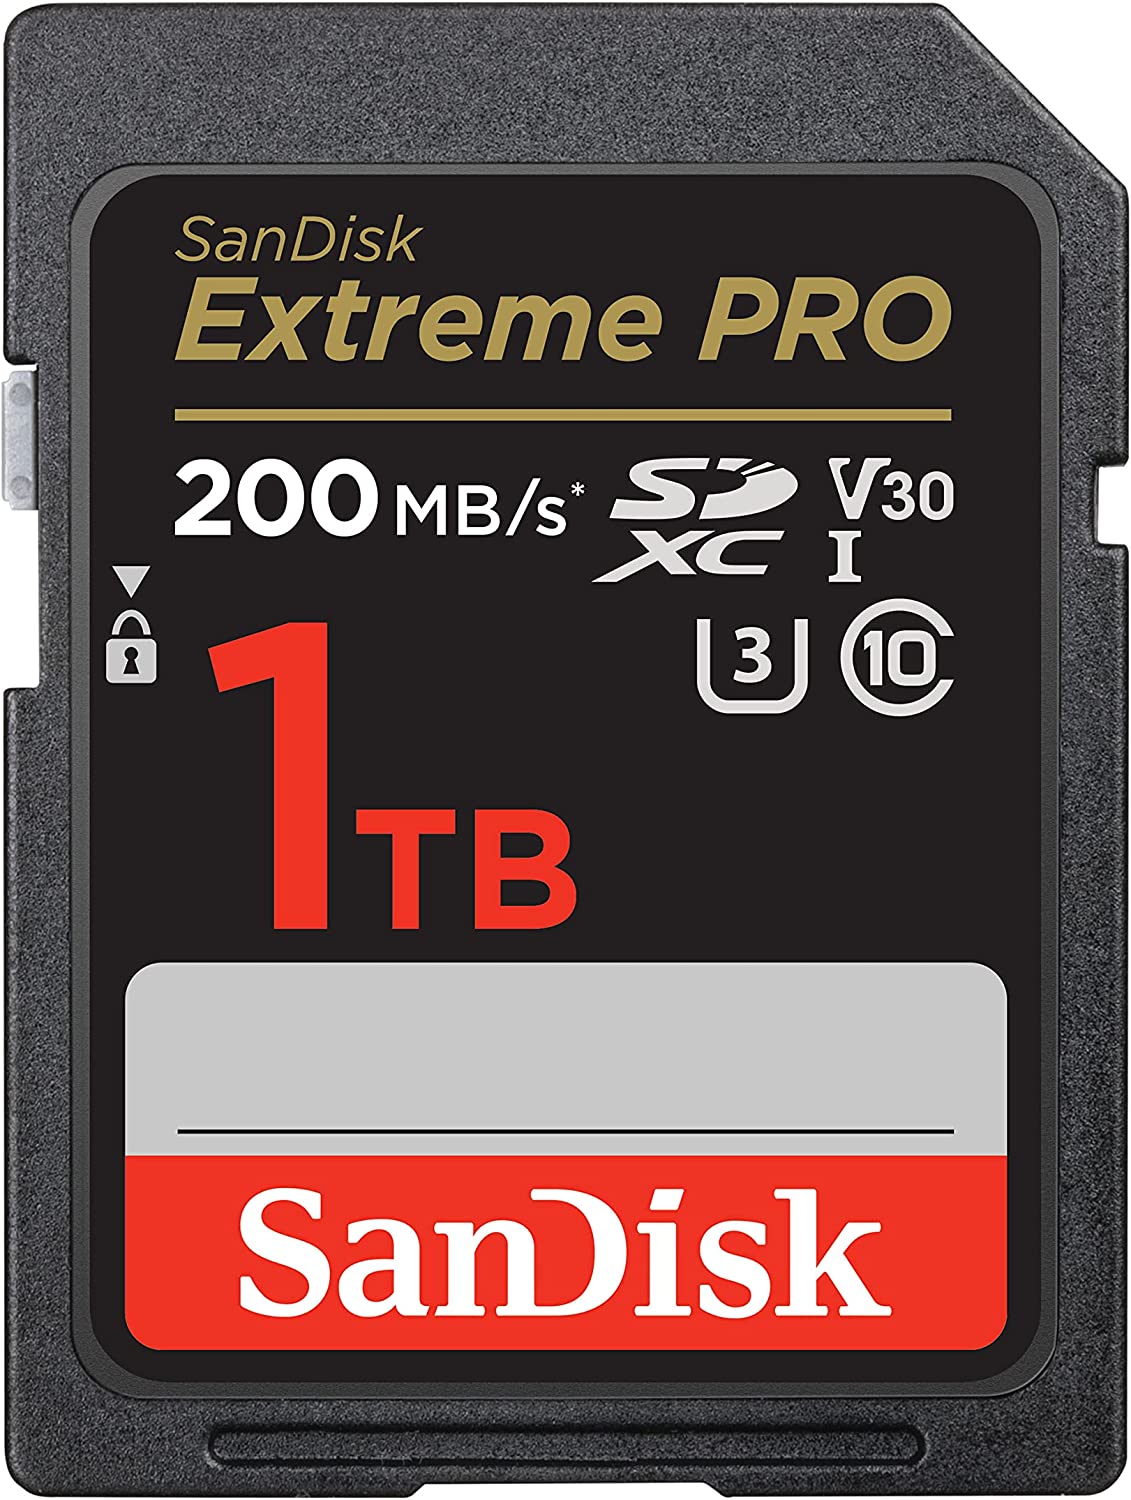 SanDisk Extreme Pro 200MB/s 1TB SDXC UHS-I Memory Card